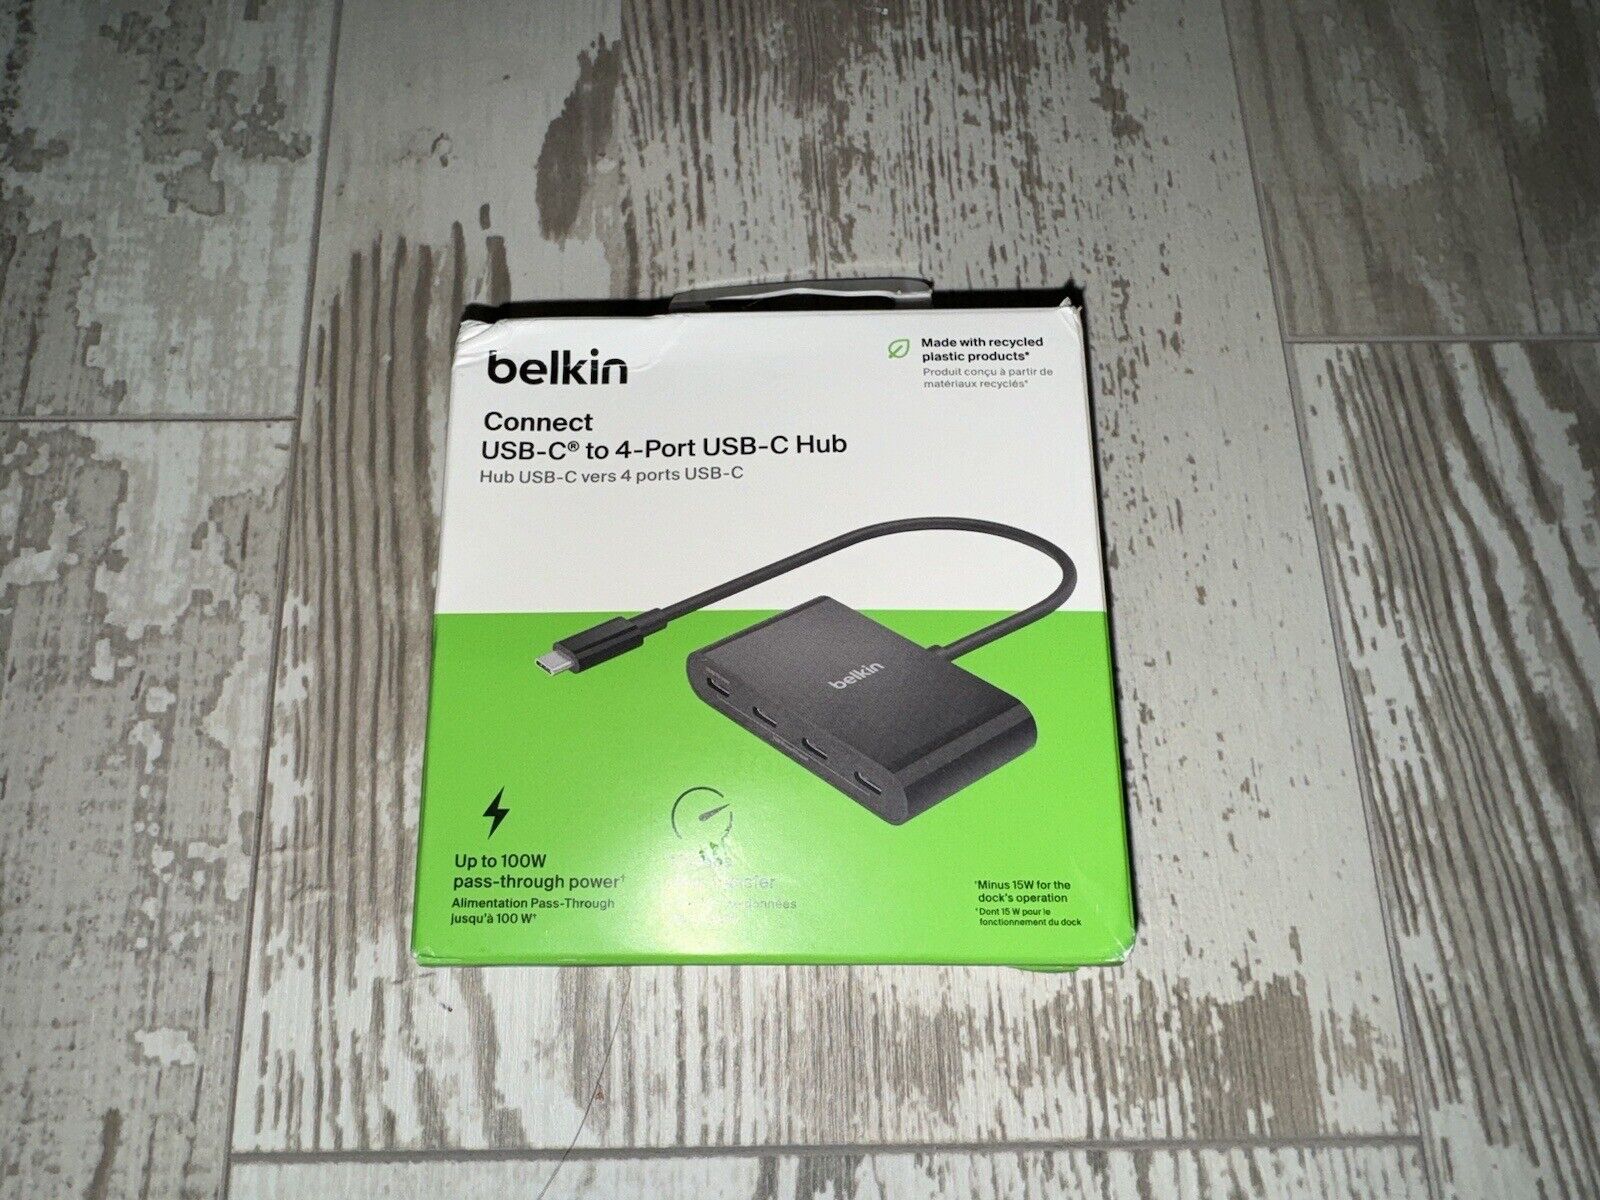 Belkin CONNECT USB-C to 4-Port USB-C Hub (AVC018) for MacBook,iPad,Chromebook,PC